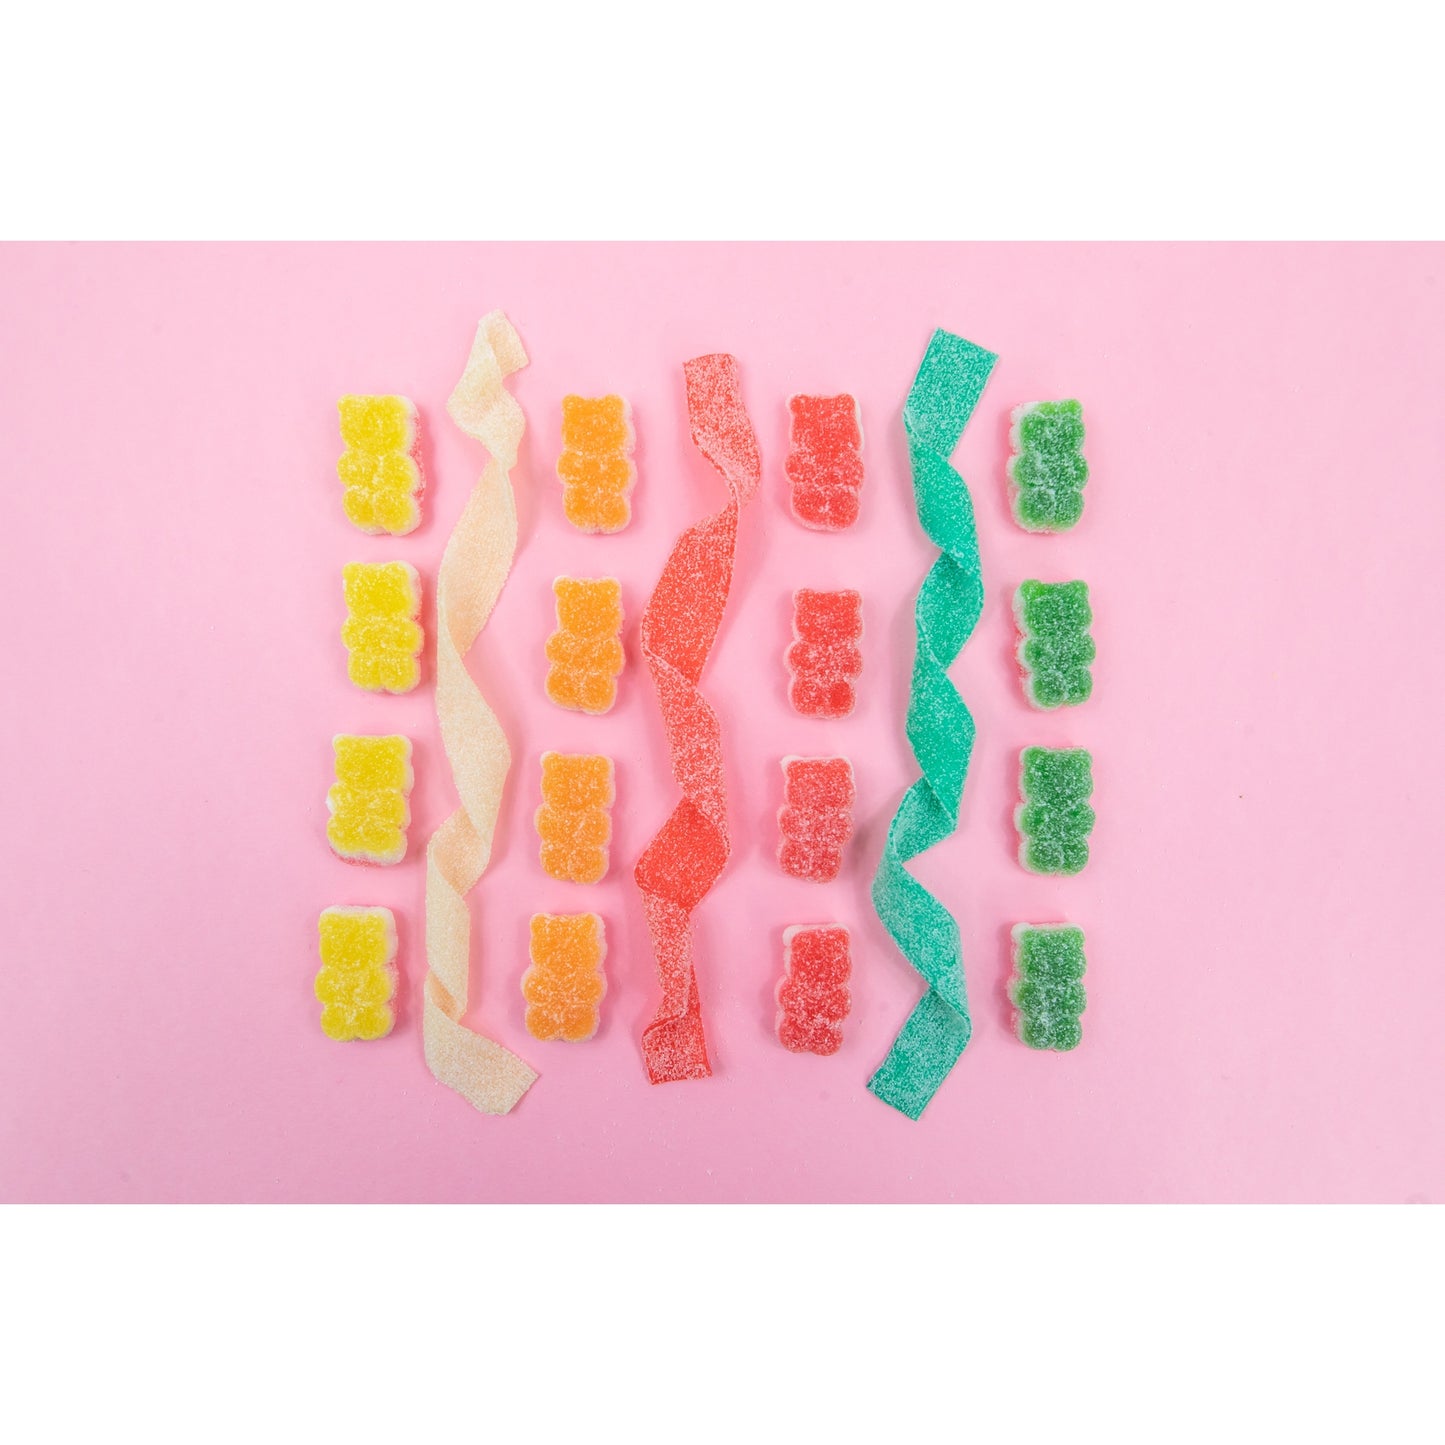 Triple-Decker Sour Bears Candy